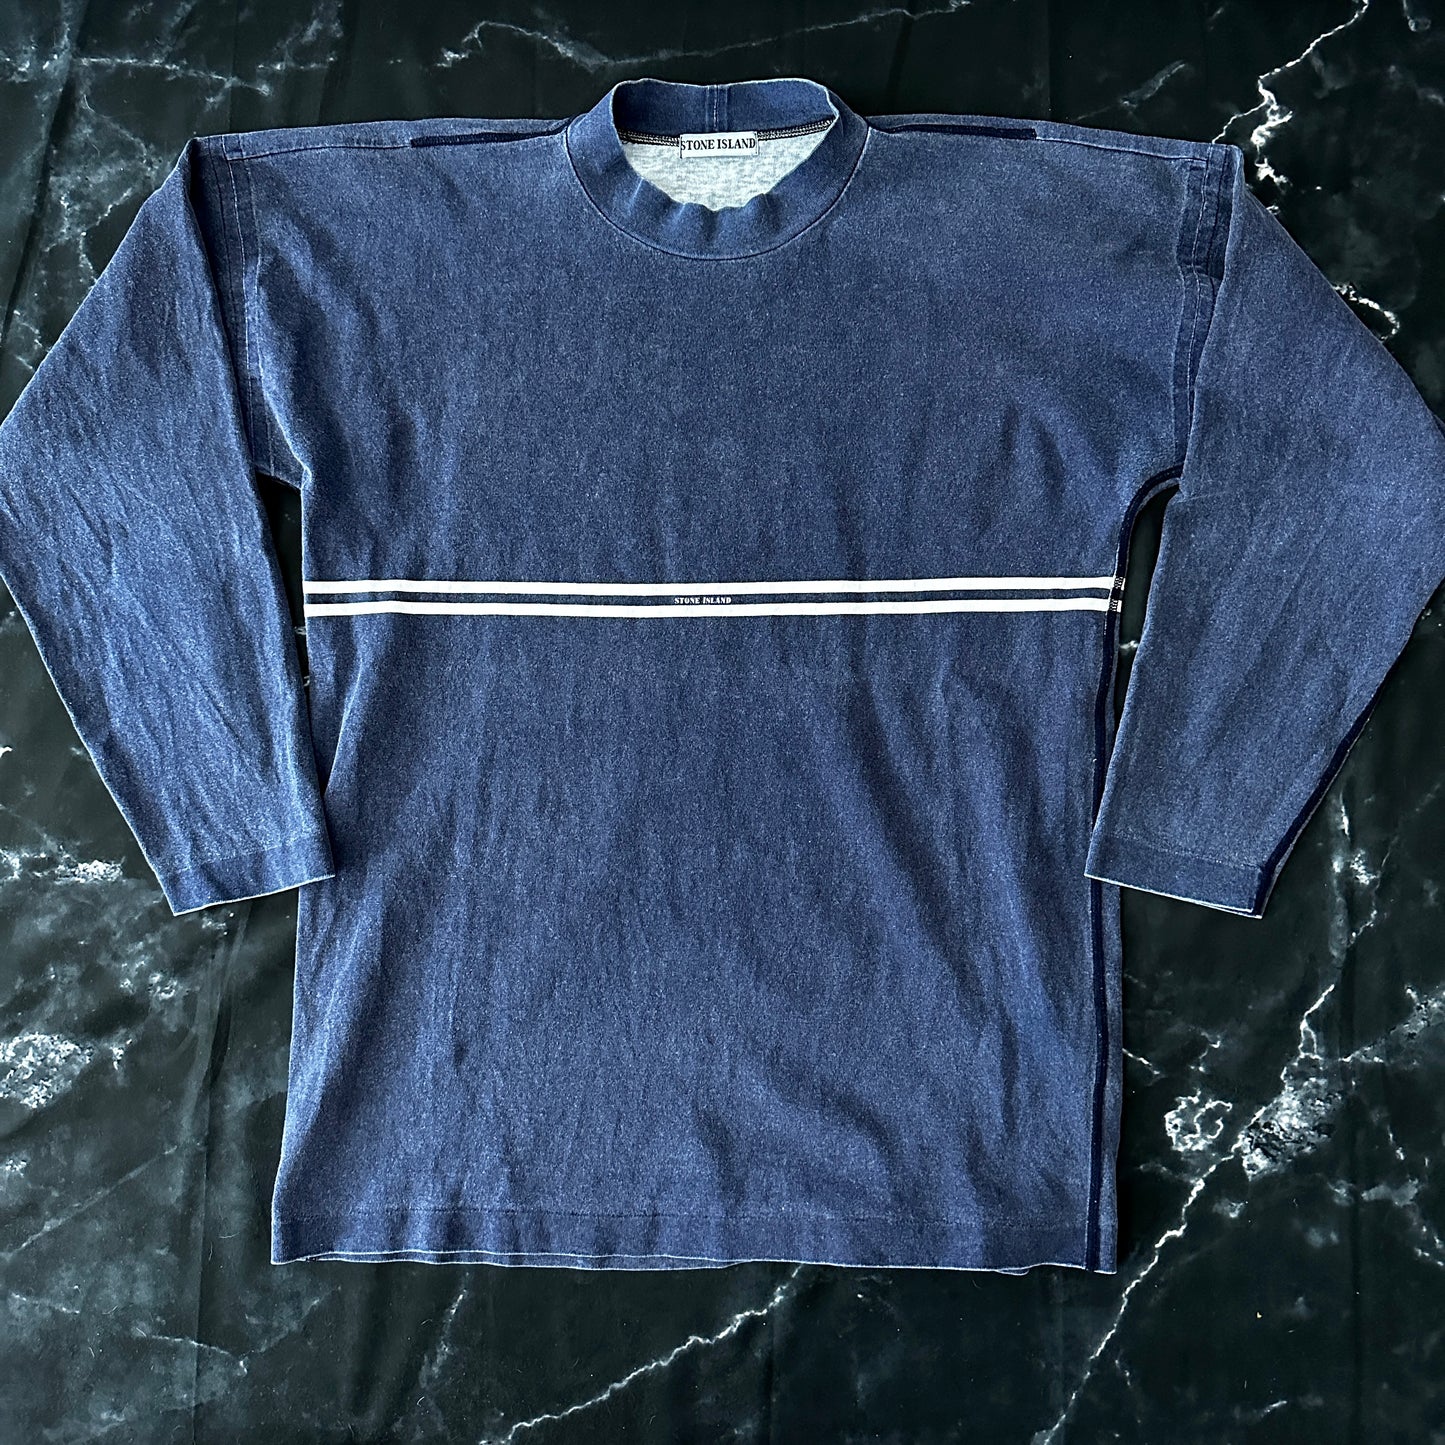 Stone Island Vintage 80s Japan Longsleeve Shirt - XL - Made in Italy